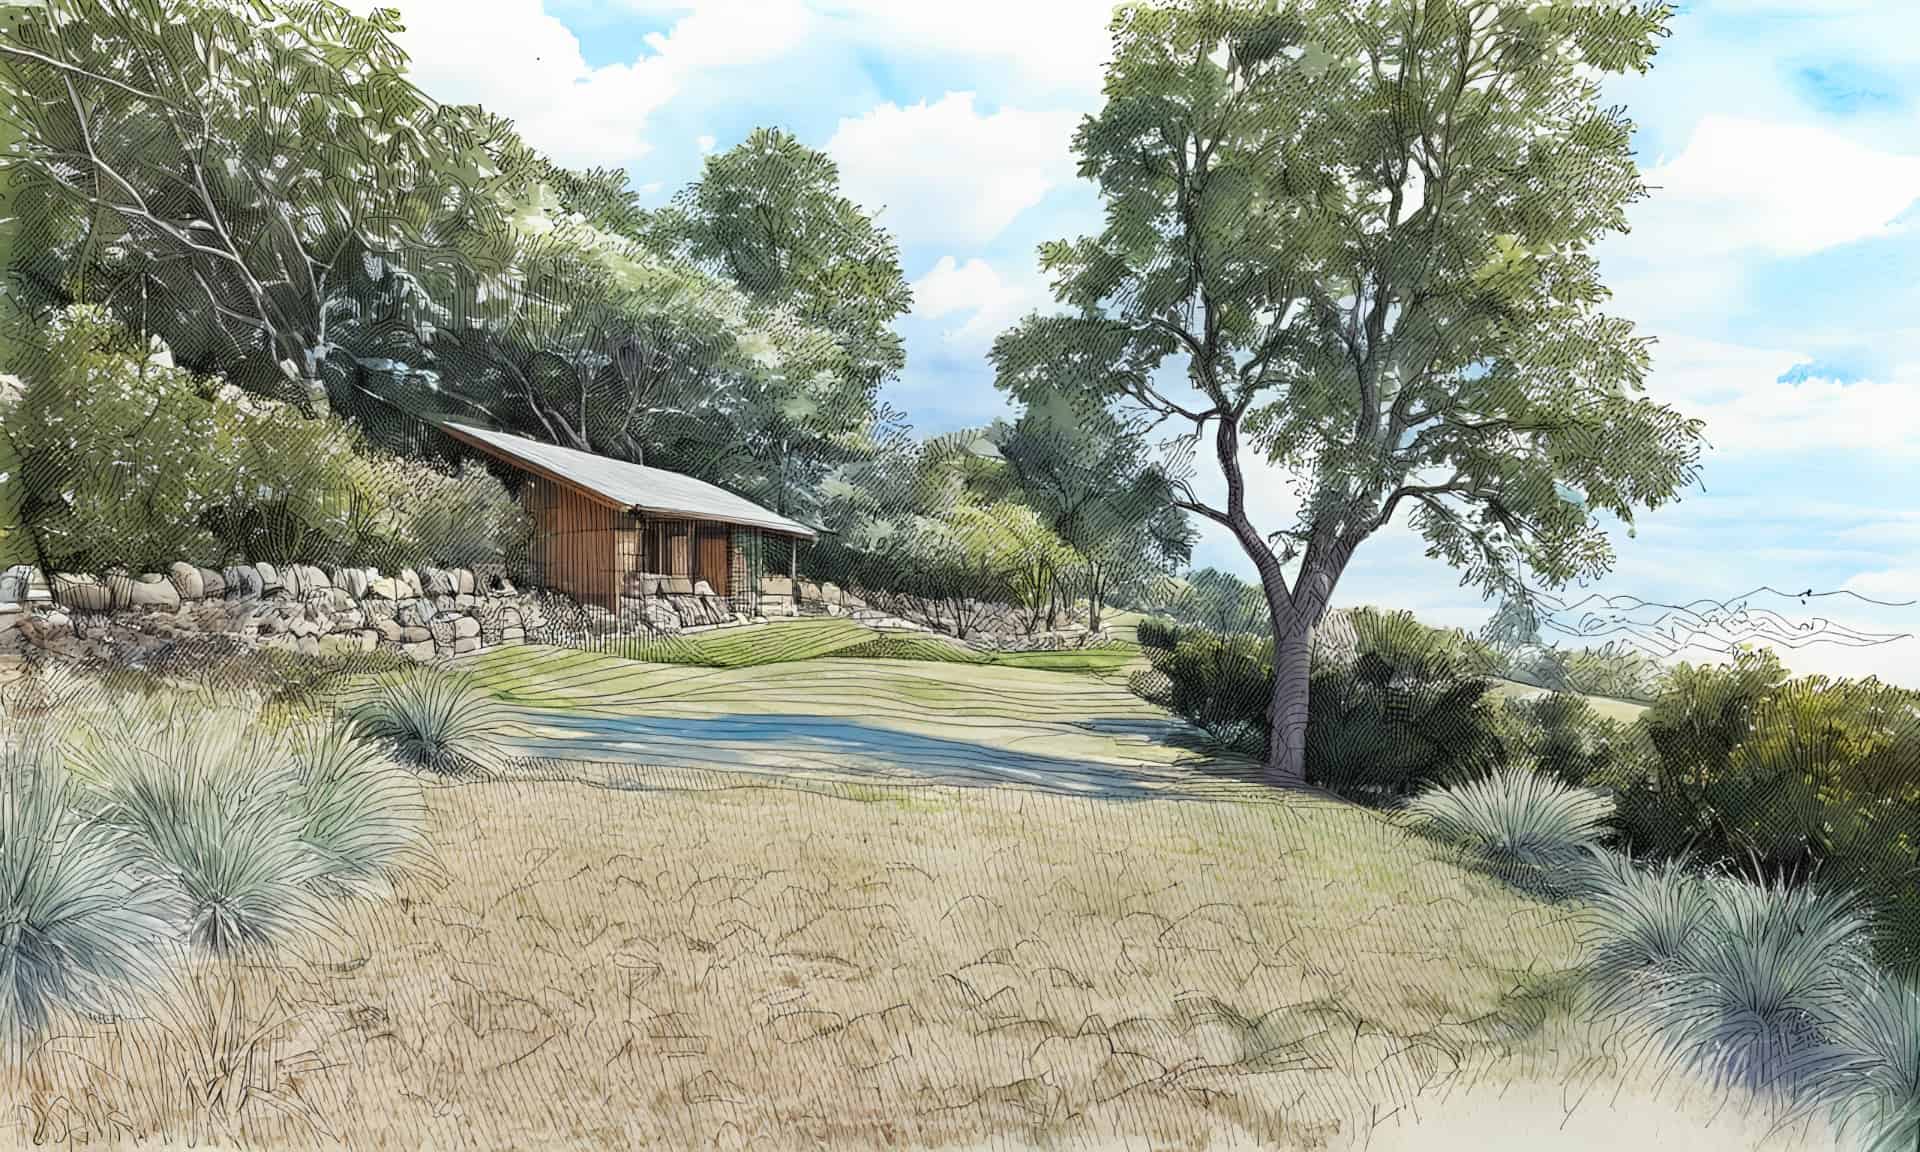 East Dene - revised plans for lodges in the woods